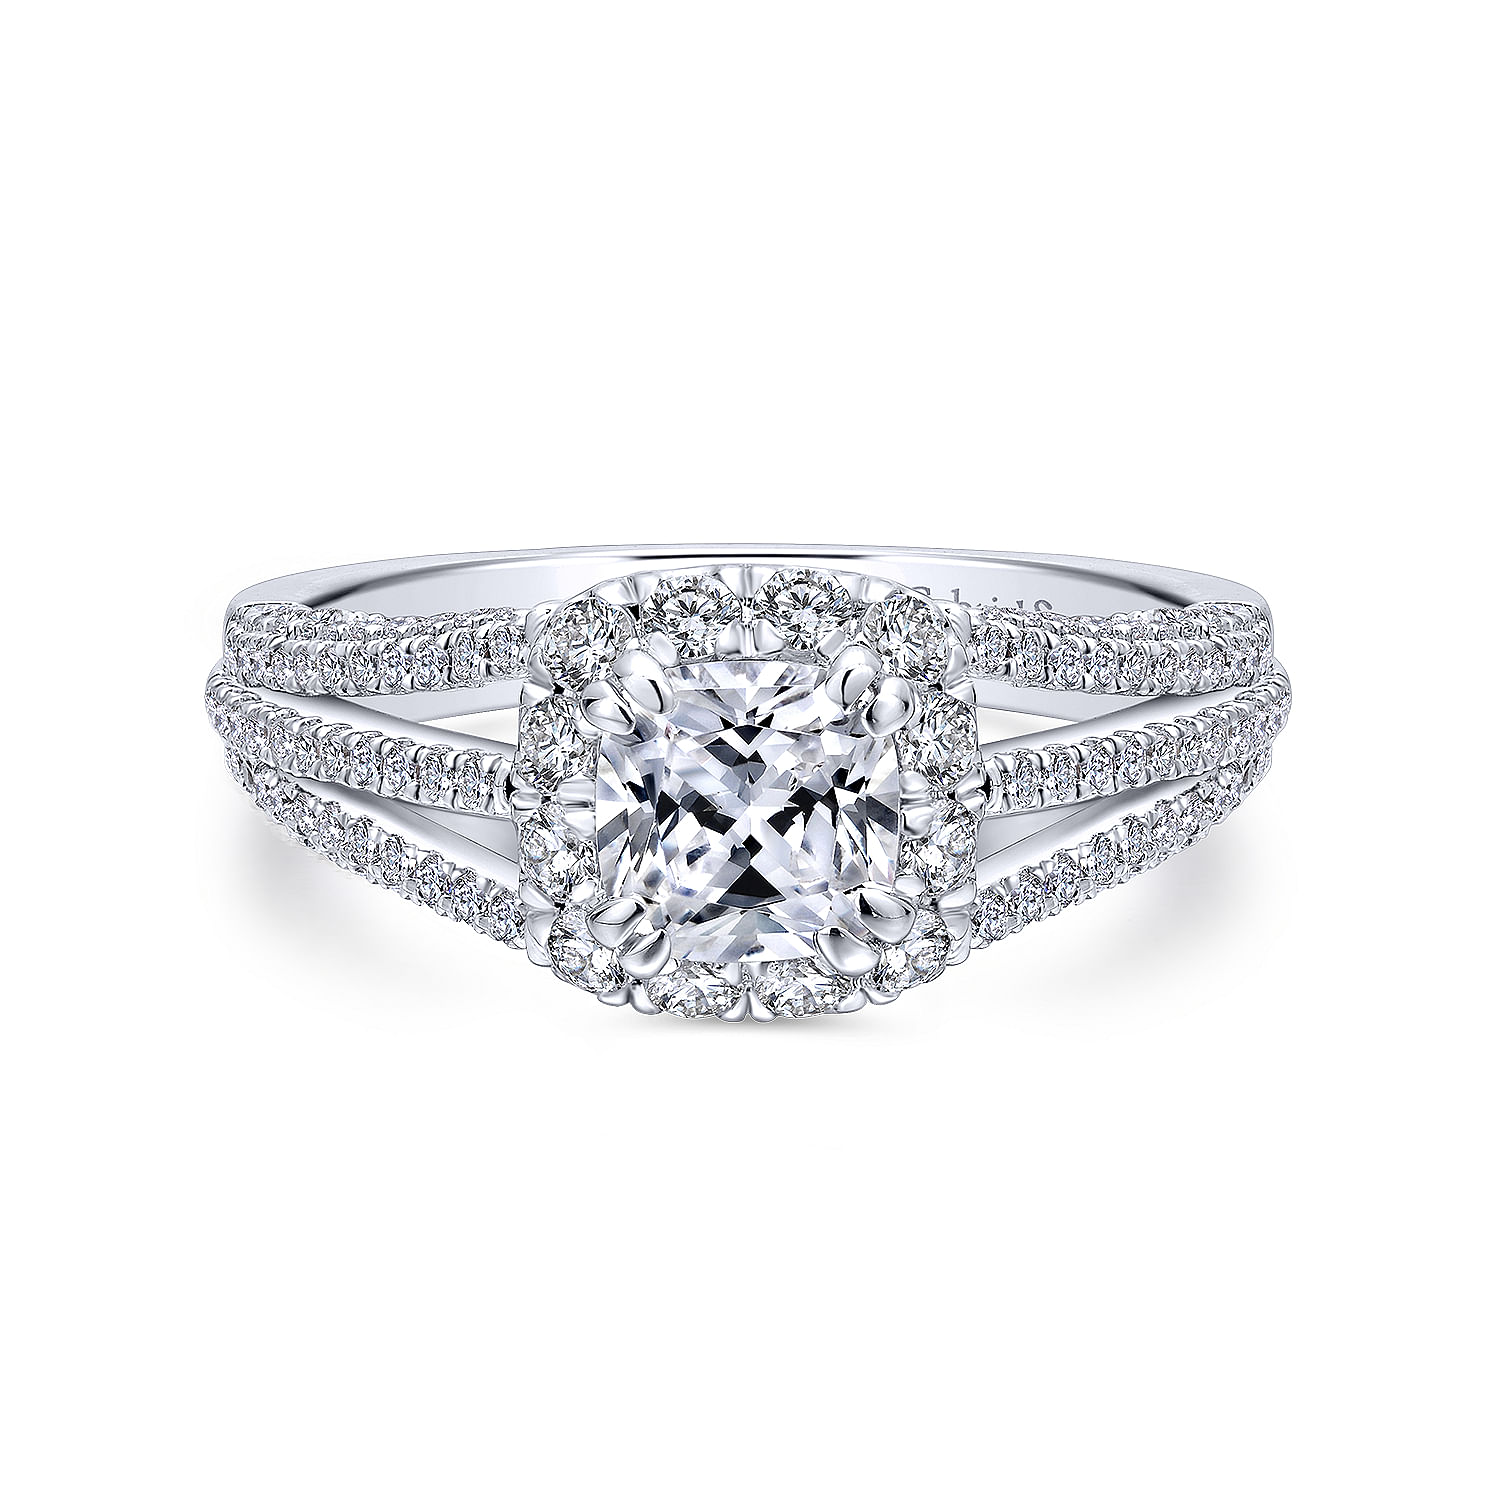 Gabriel - 18K White Gold Cushion Halo Diamond Engagement Ring